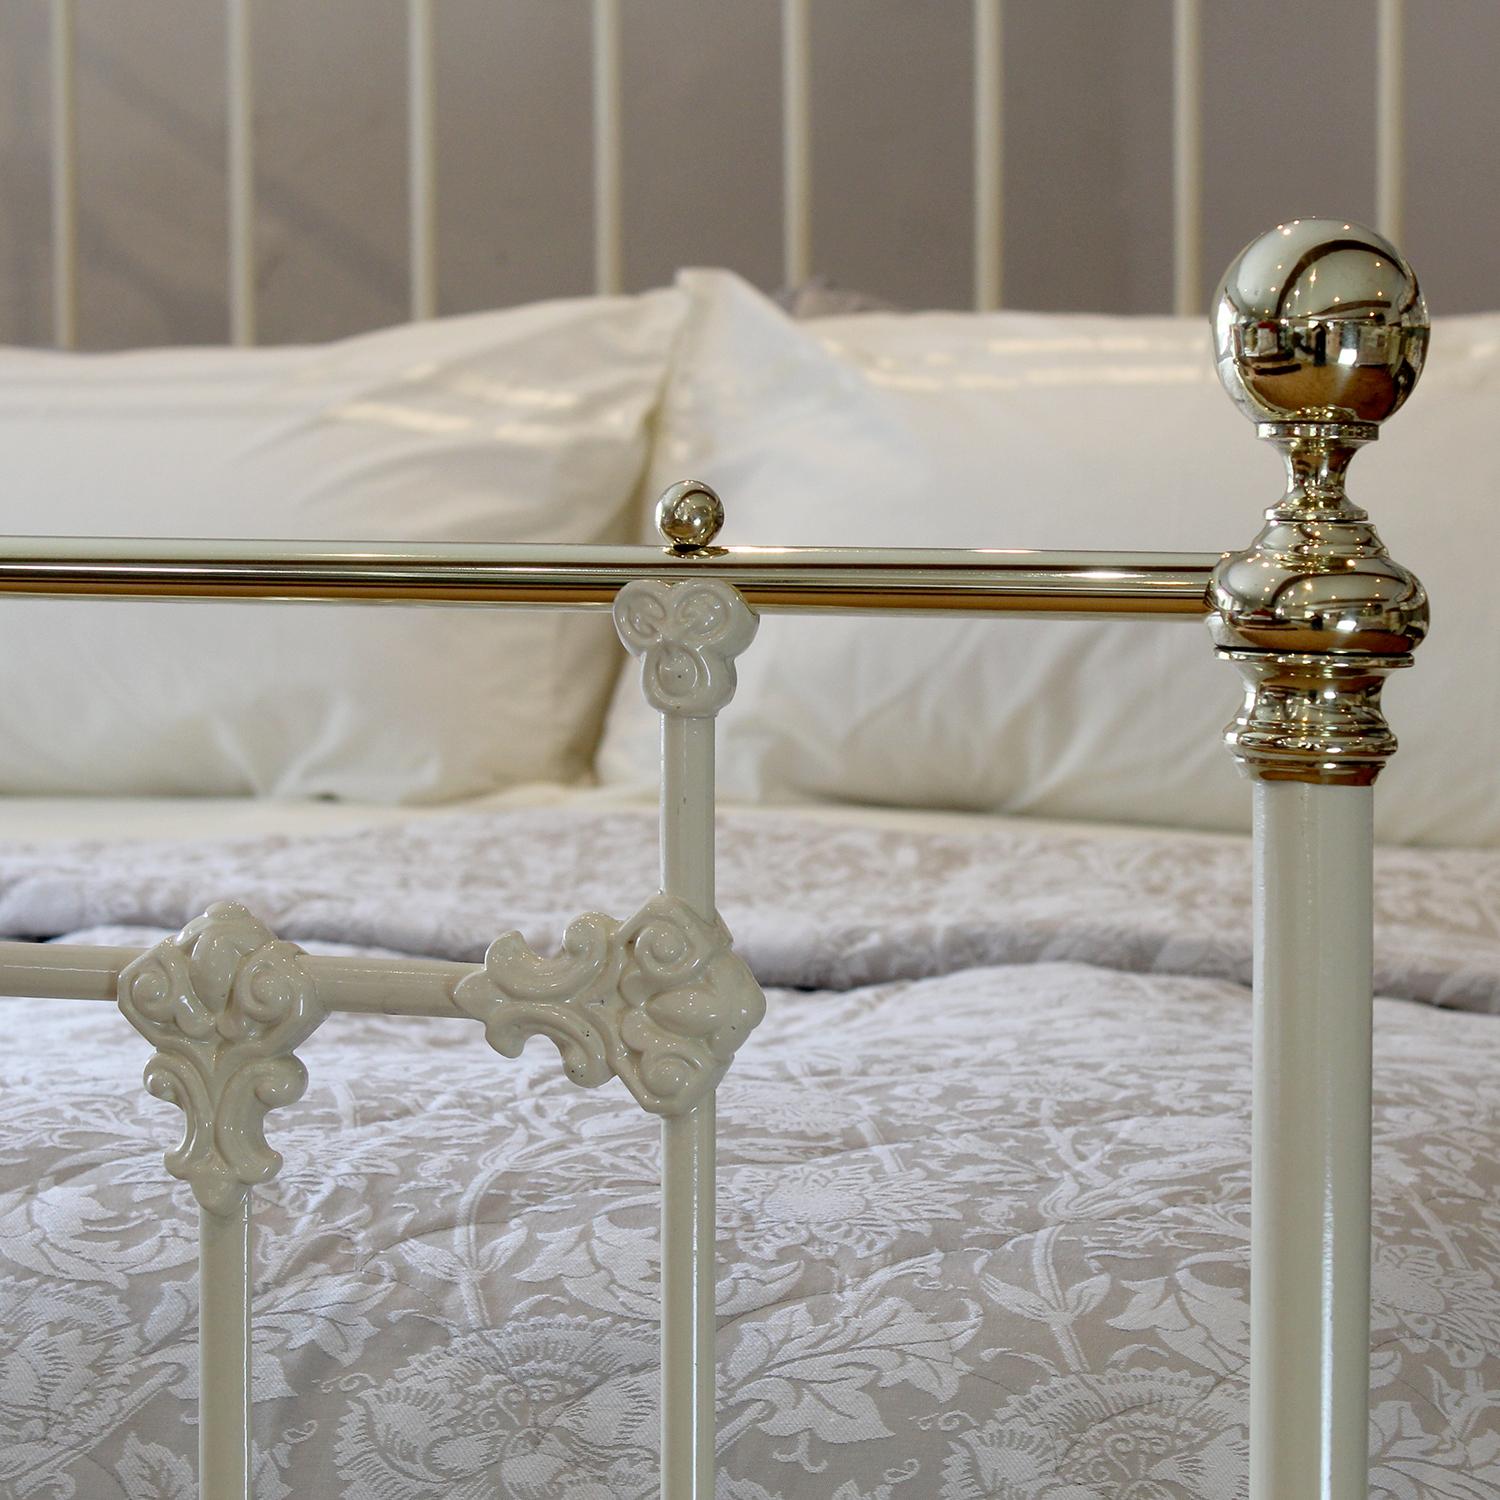 Cast Victorian Antique Bed in Cream, MK280